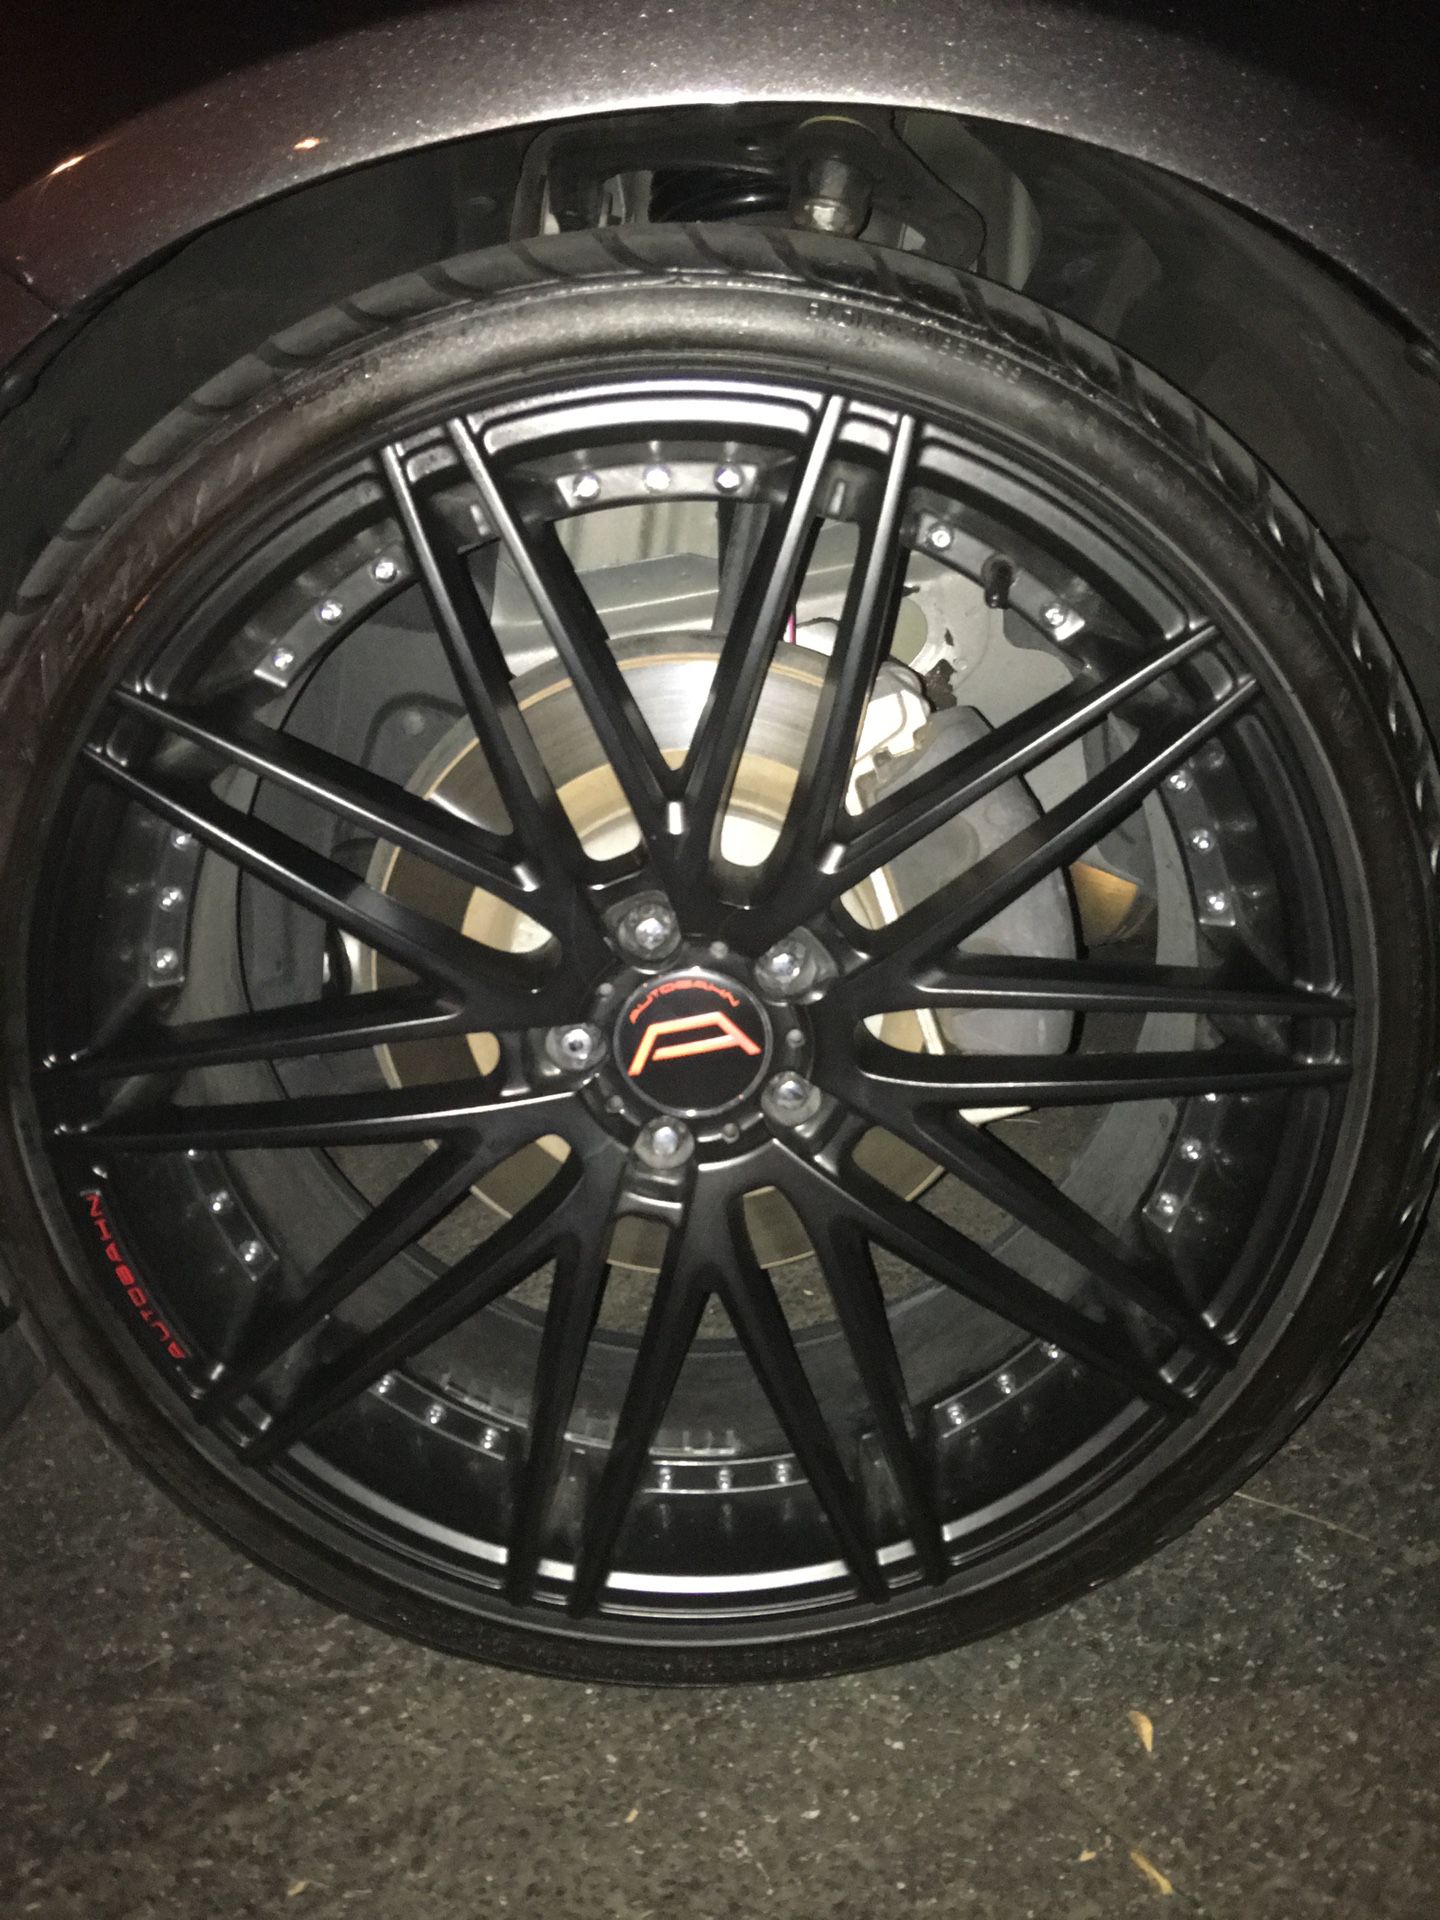 Autobahn 22” wheels w/ tires